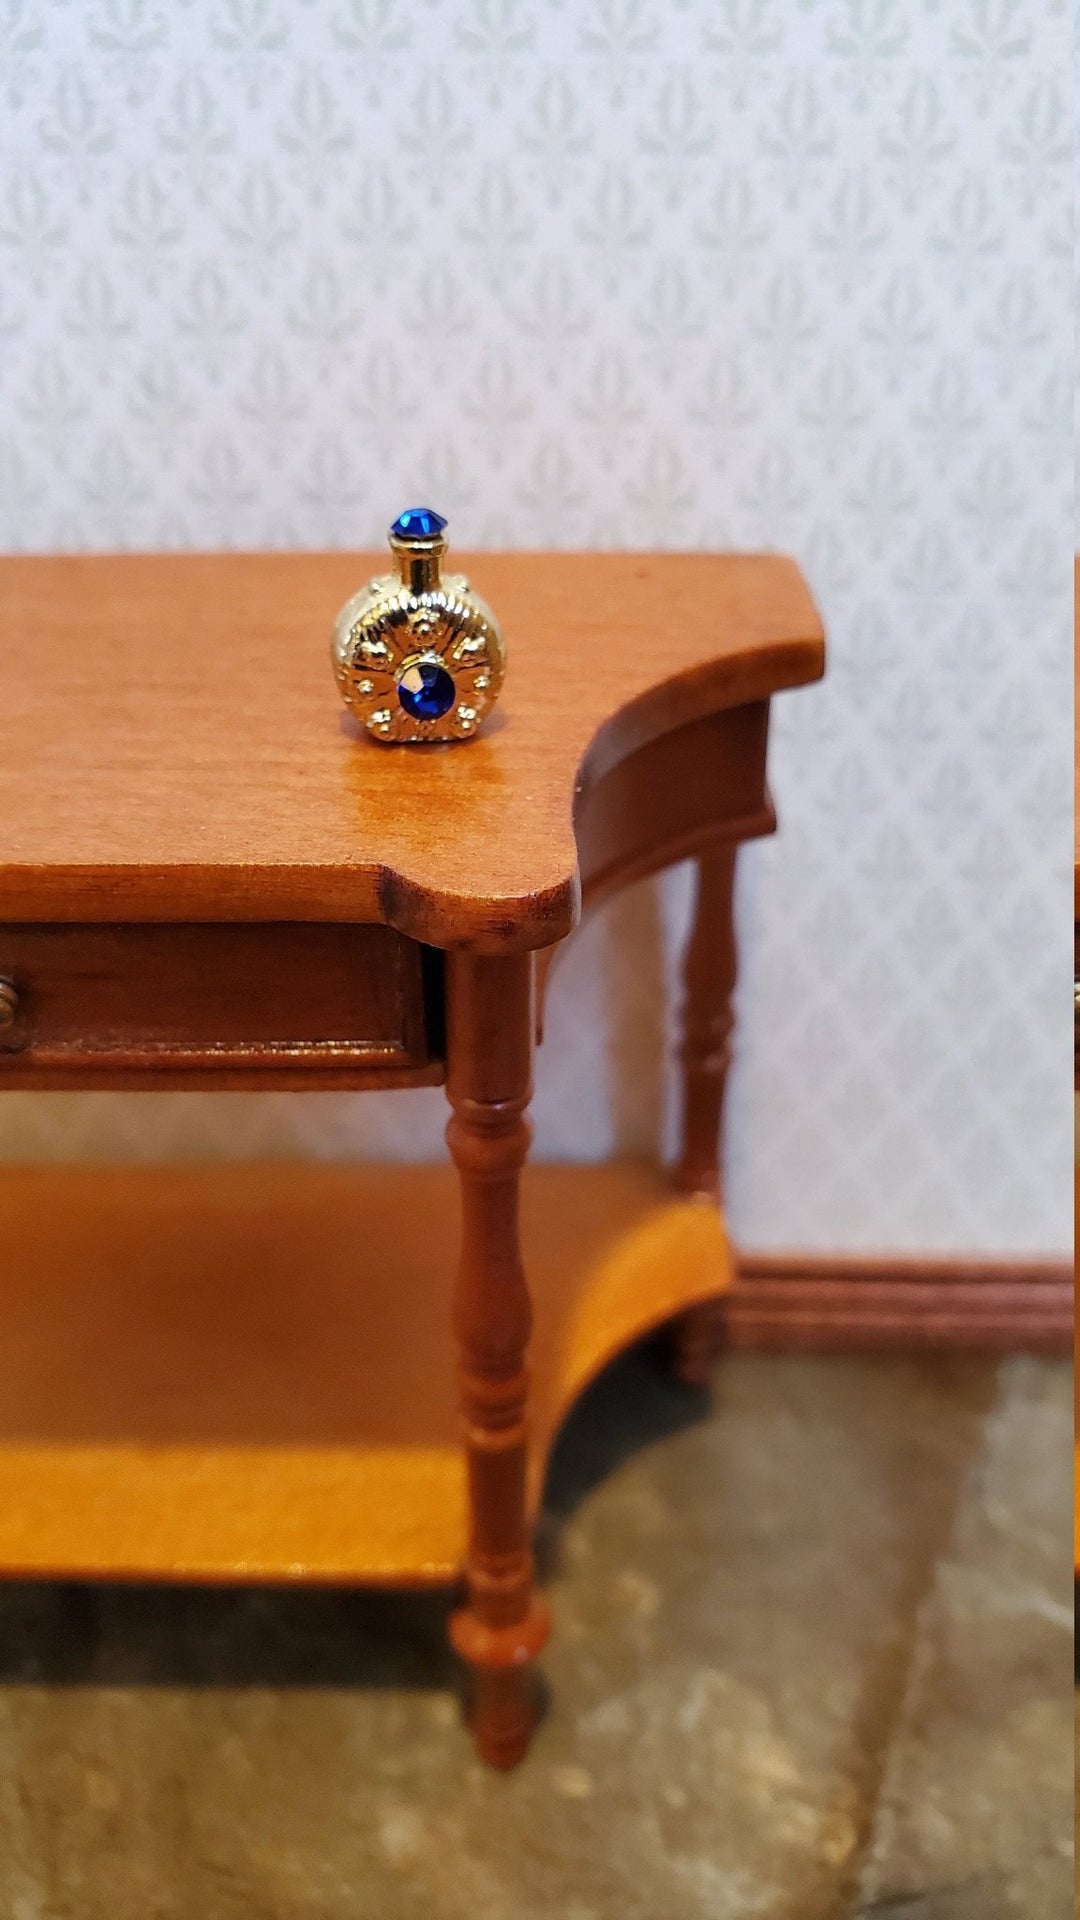 Dollhouse Miniature Perfume Bottle Jeweled Gold & Blue 1:12 Scale Vanity Accessories - Miniature Crush